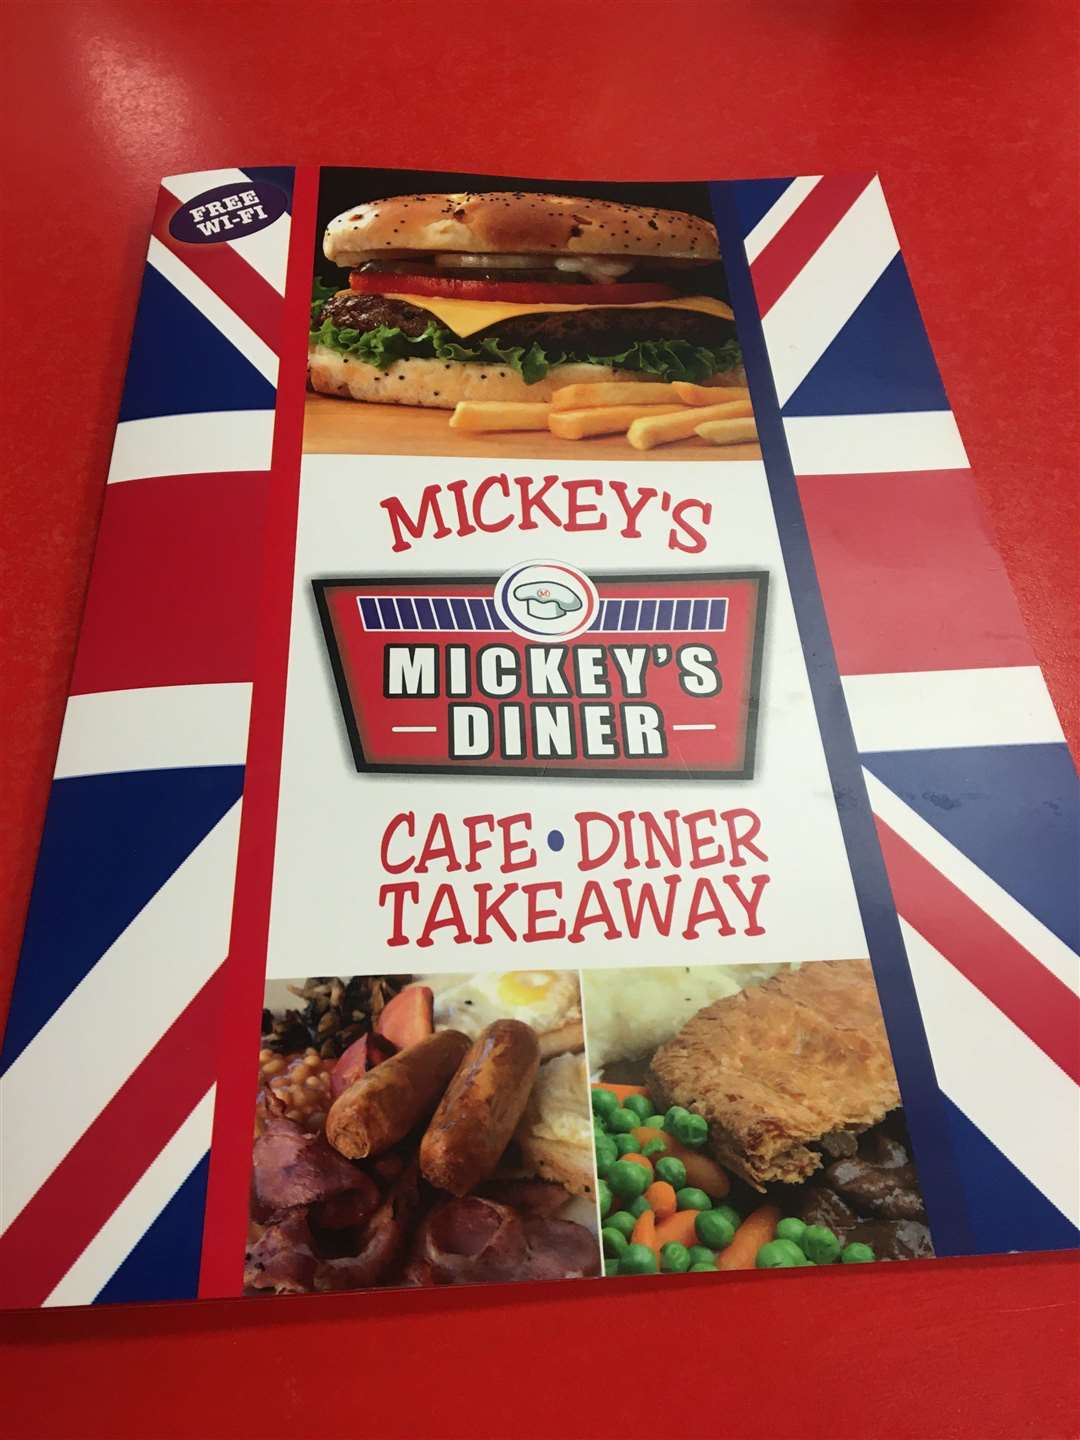 The Mickey's Diner menu